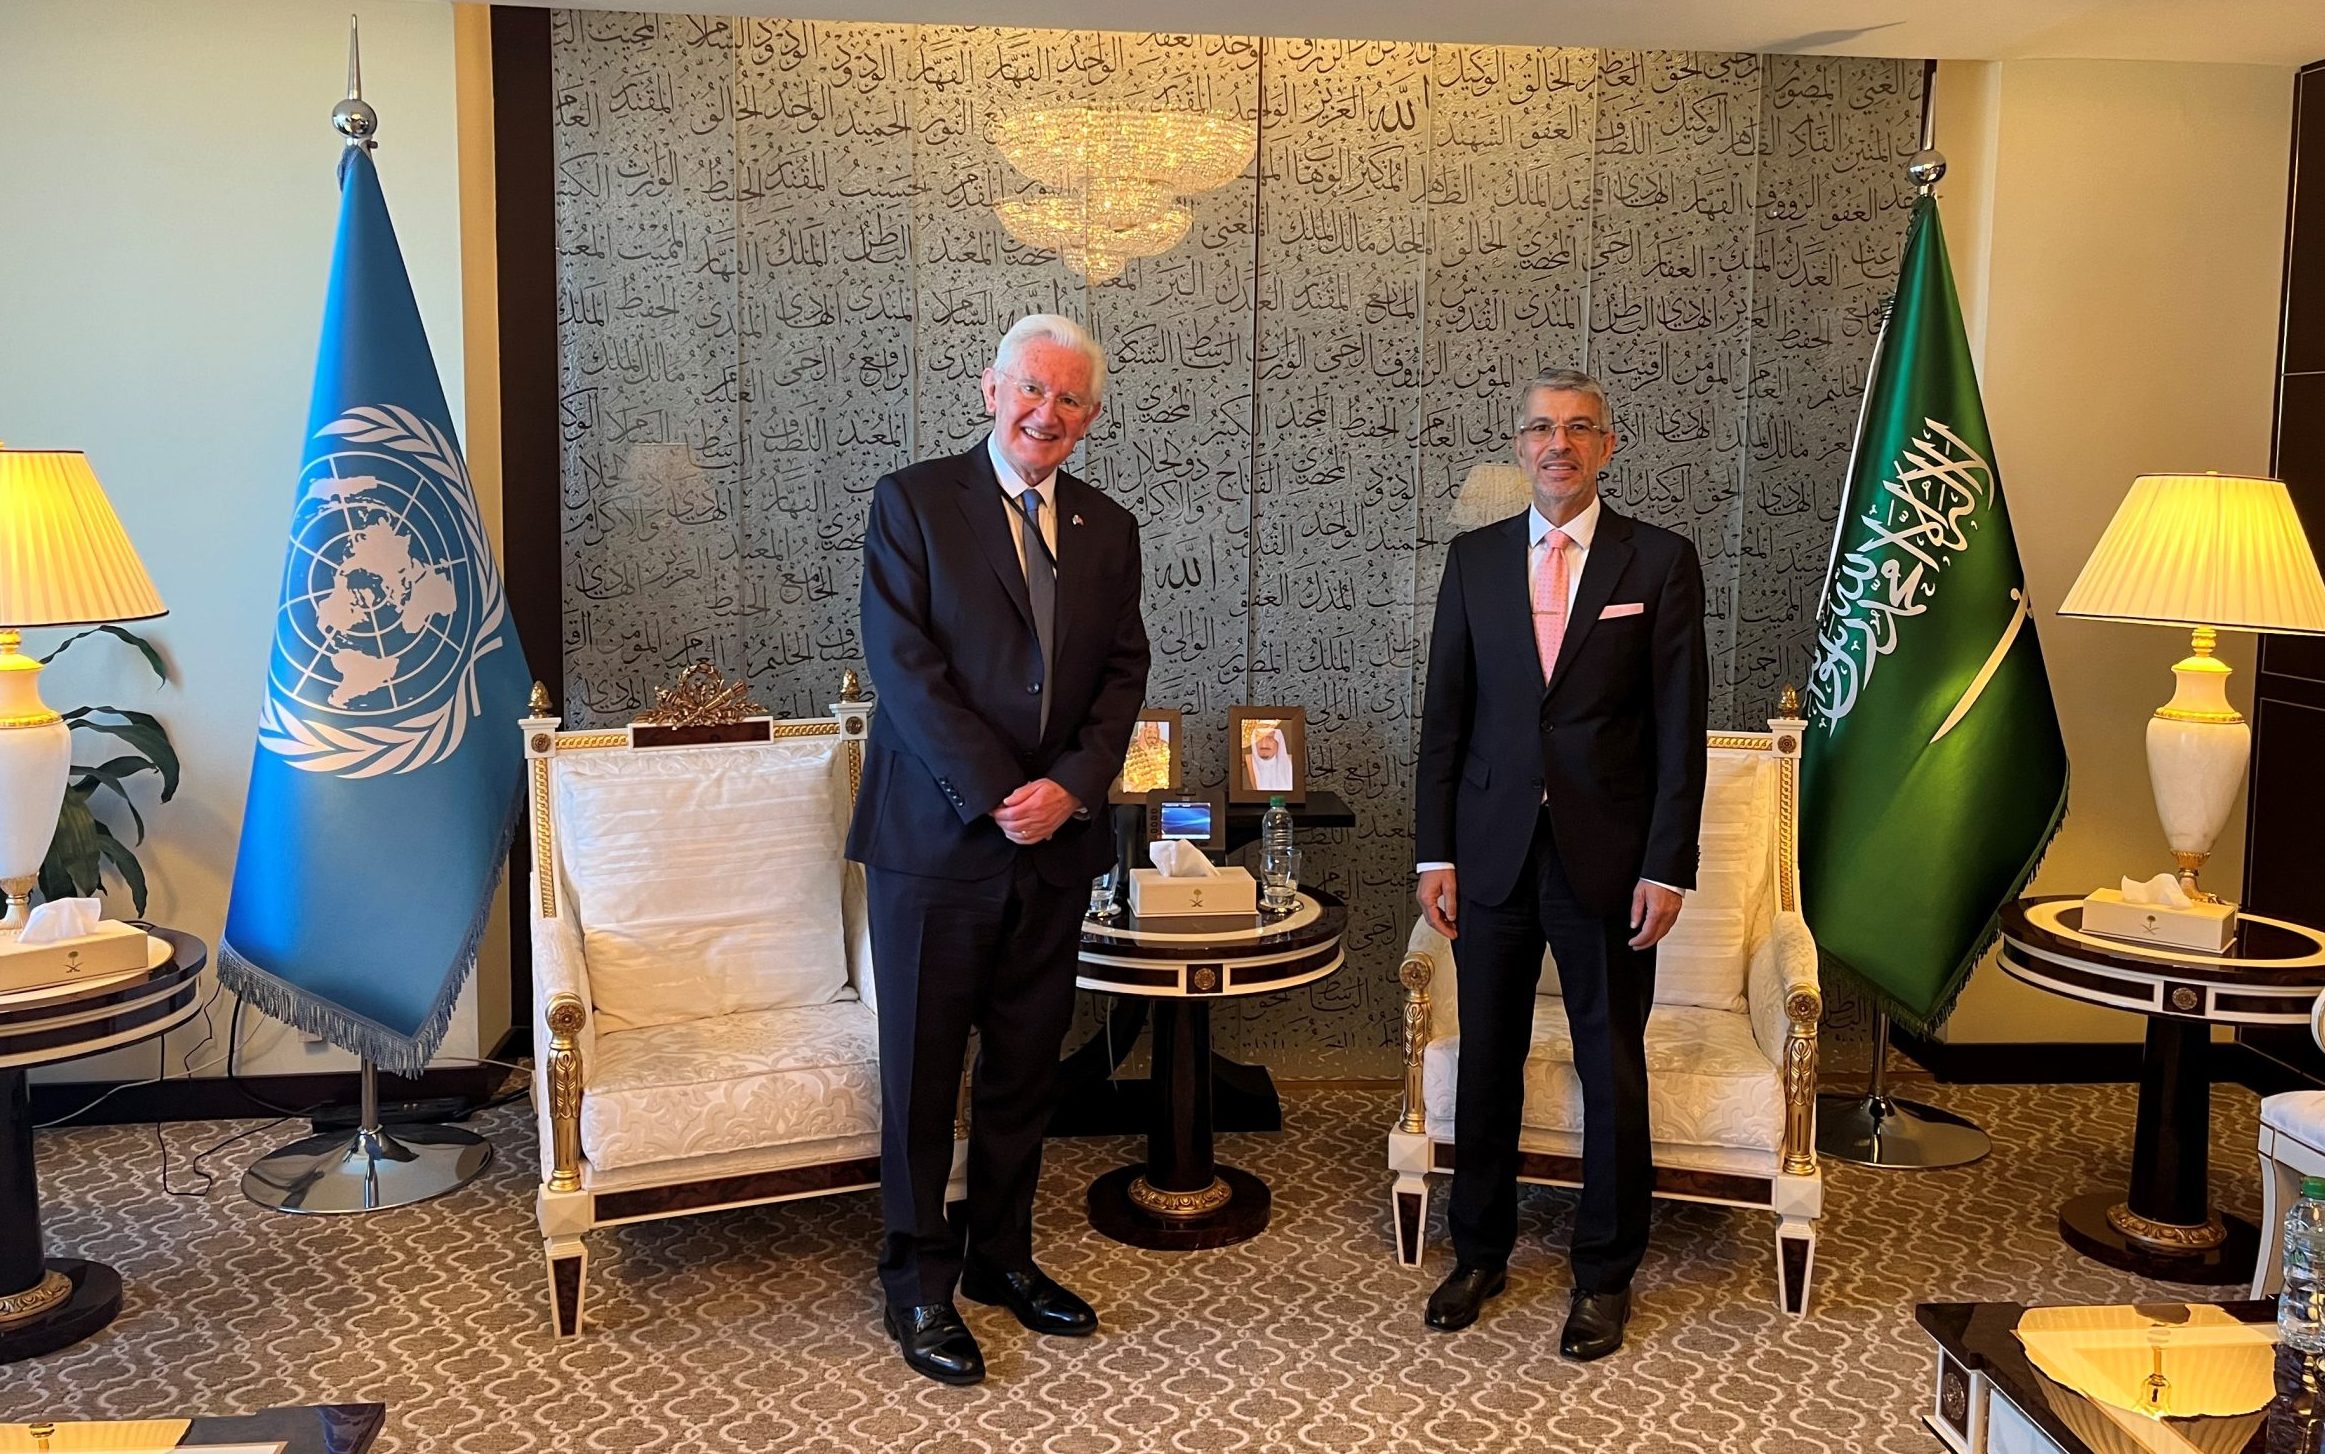 H.E. Ambassador Paul Beresford-Hill and H.E. Ambassador Michèle Bowe met with H.E. Ambassador Abdulaziz Al-Wasil, the Permanent Representative of the Kingdom of Saudi Arabia to the United Nations